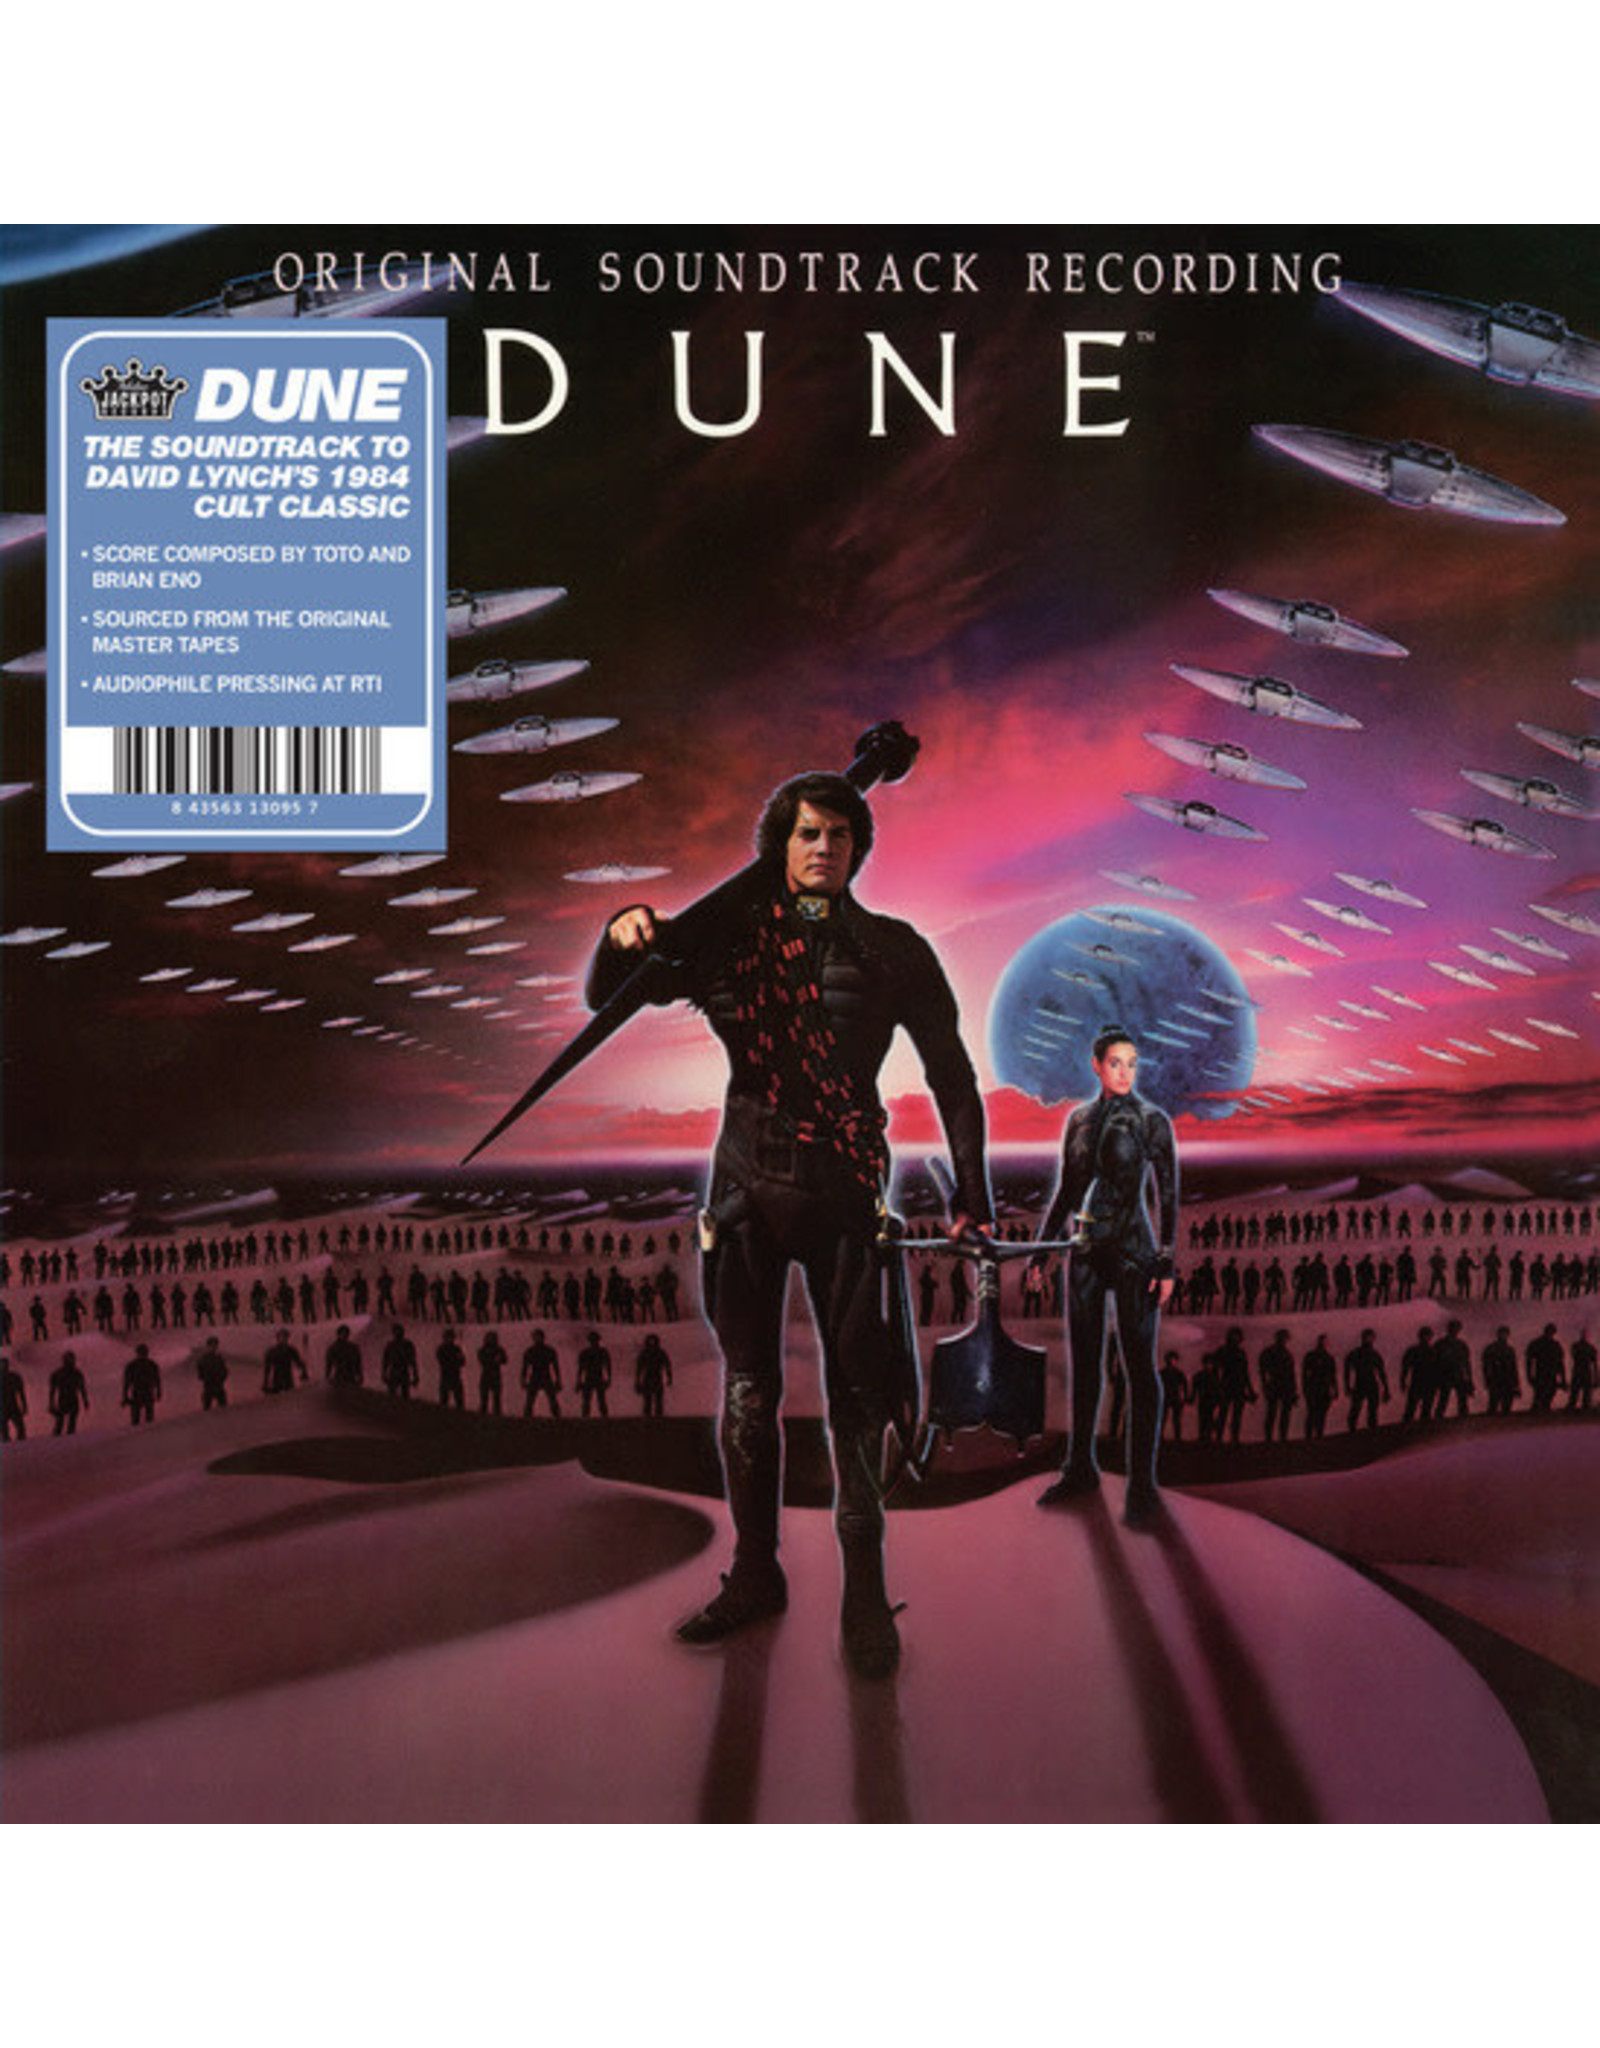 Eno Brian Eno & Toto - Dune (Original Soundtrack Recording)